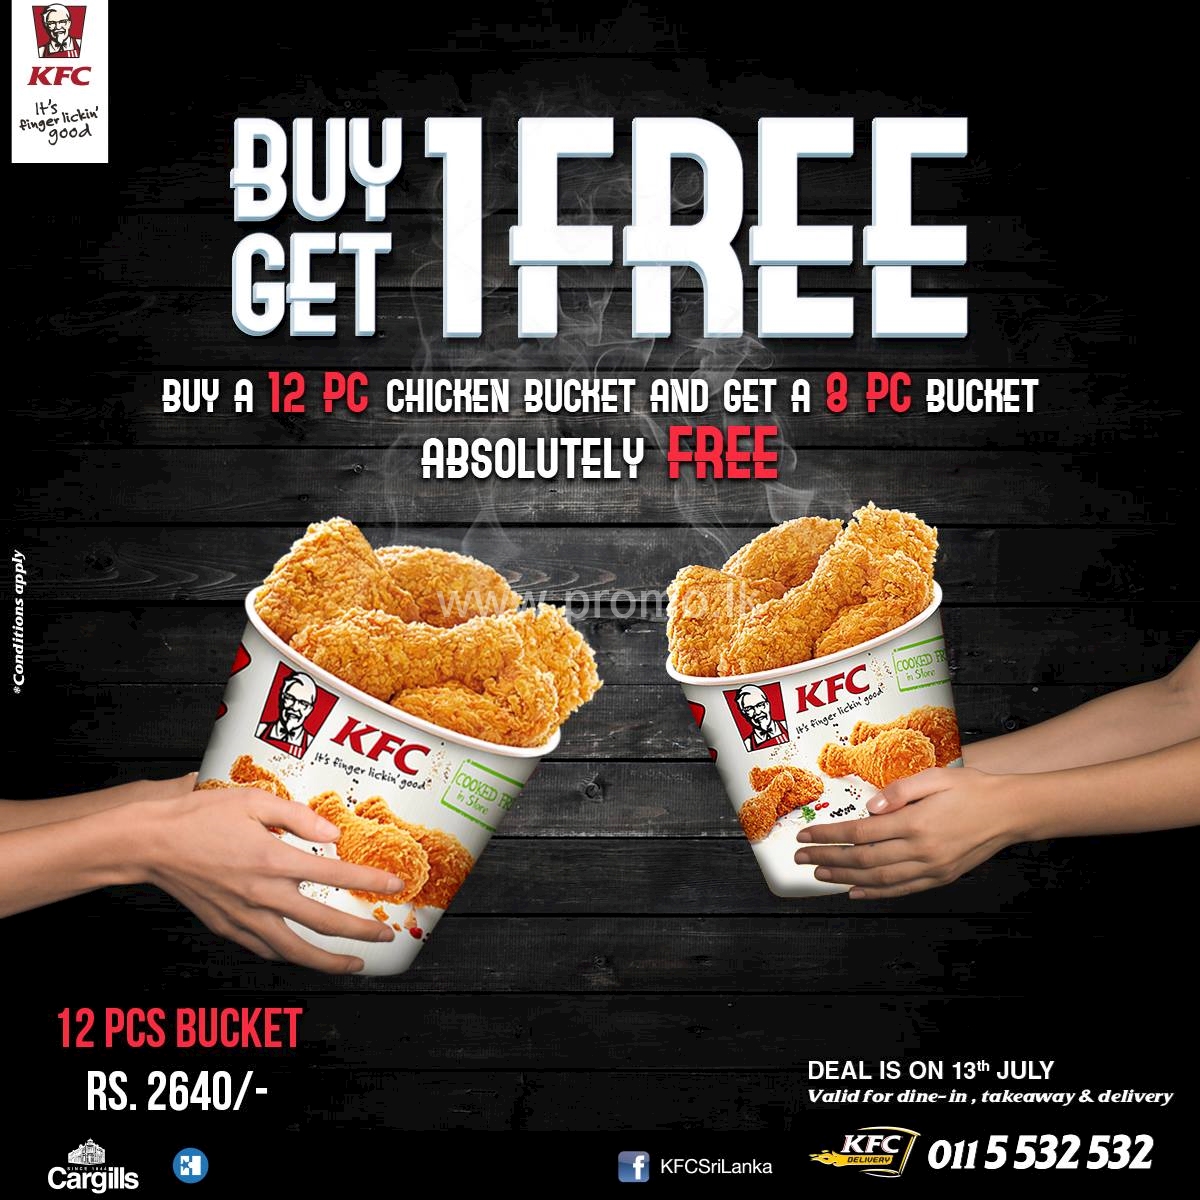 Buy 1 Get 1 Free on Chicken Bucket from KFC